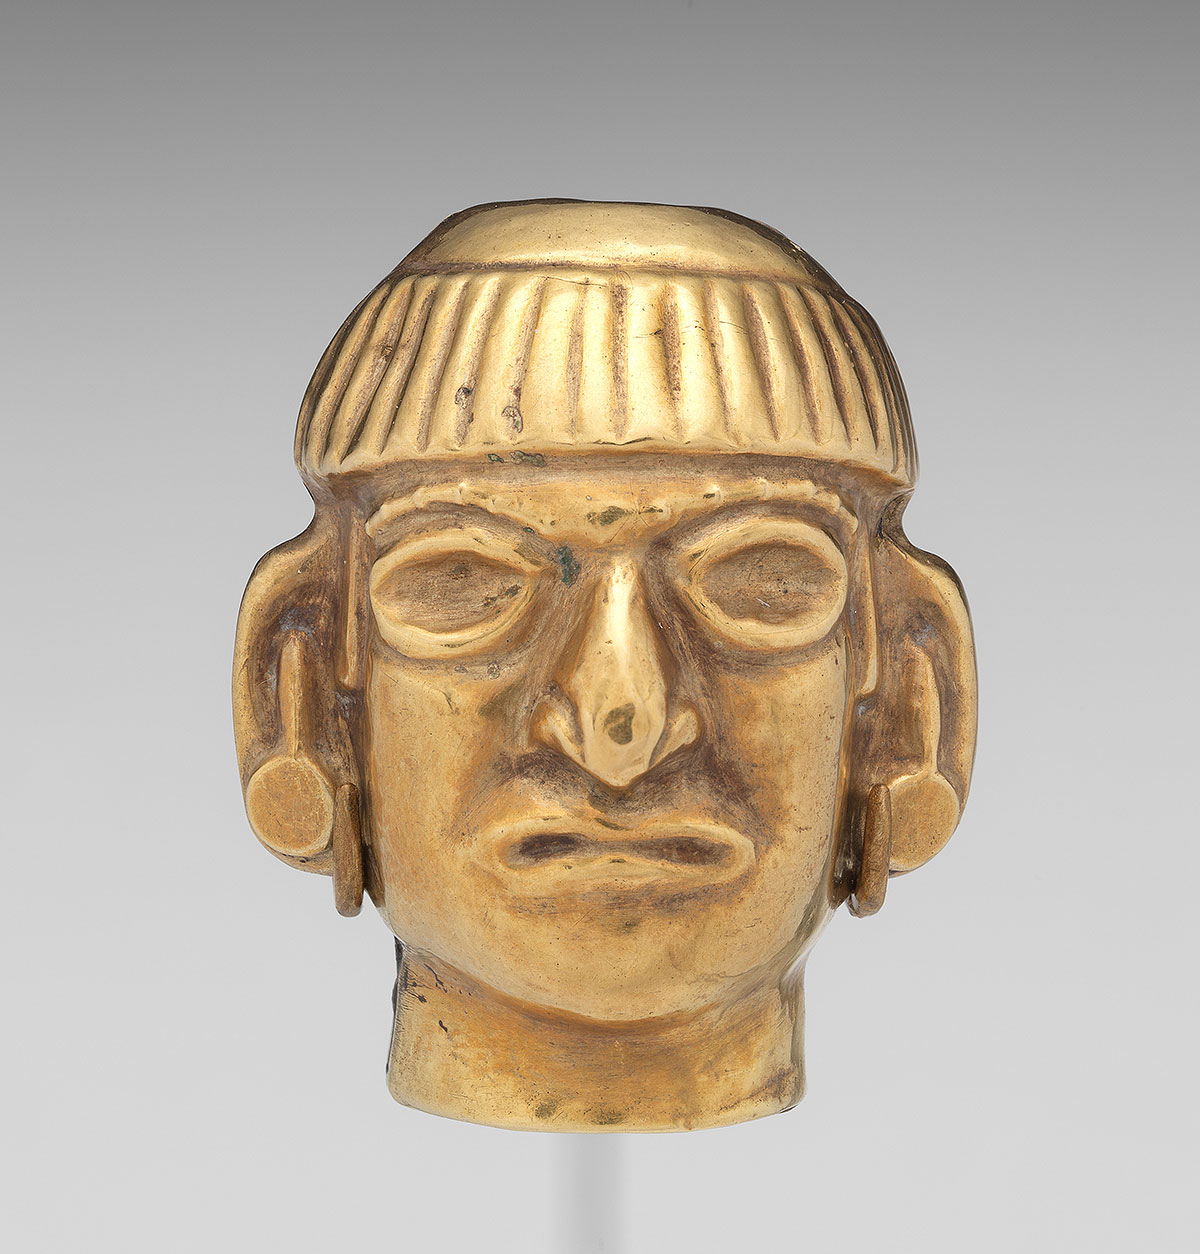 Moche culture, head-form bead 3rd - 7th century.